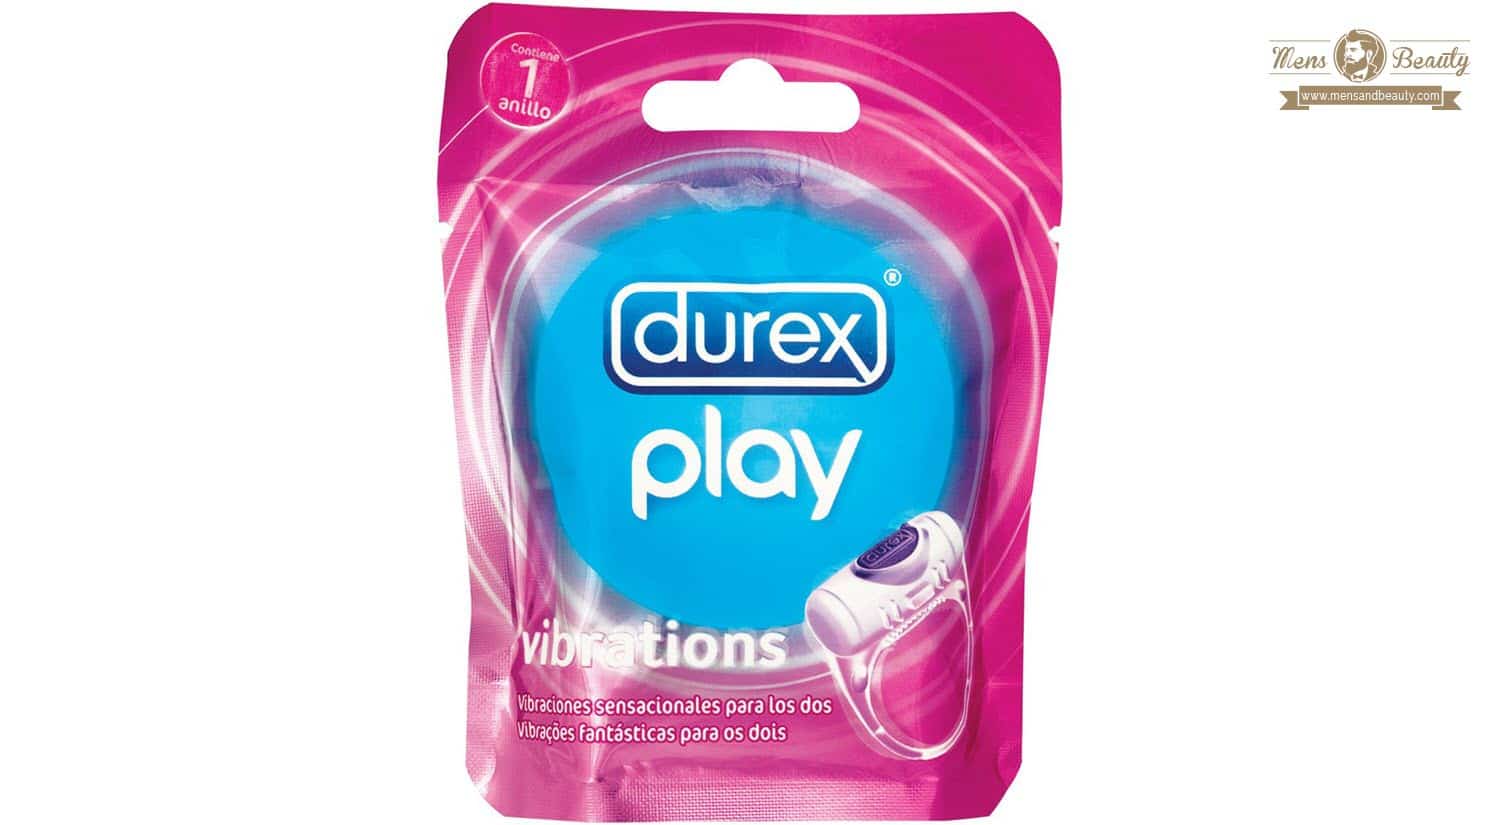 mejores juguetes sexuales para adultos anillos vibradores pene vibrations durex play